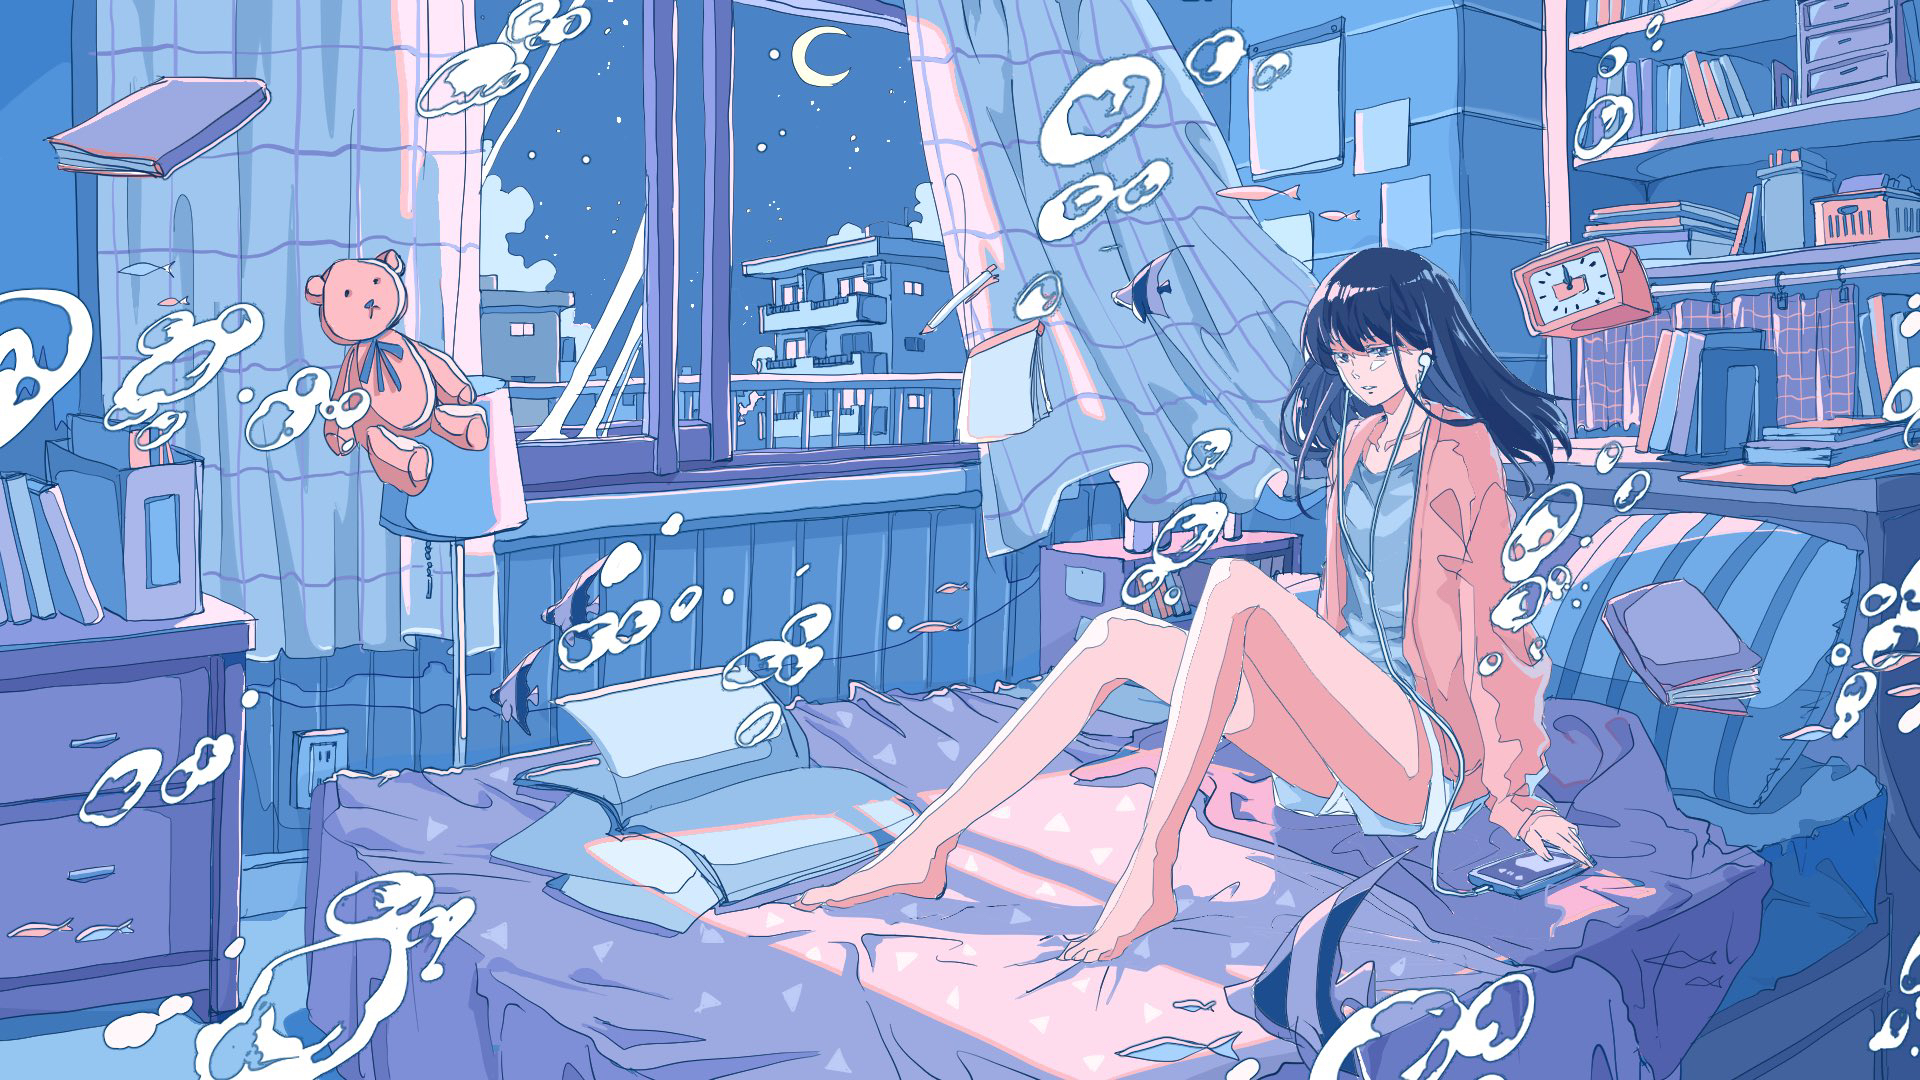 Anime 1920x1080 anime anime girls original characters artwork Ichigoame room underwater in bed headphones